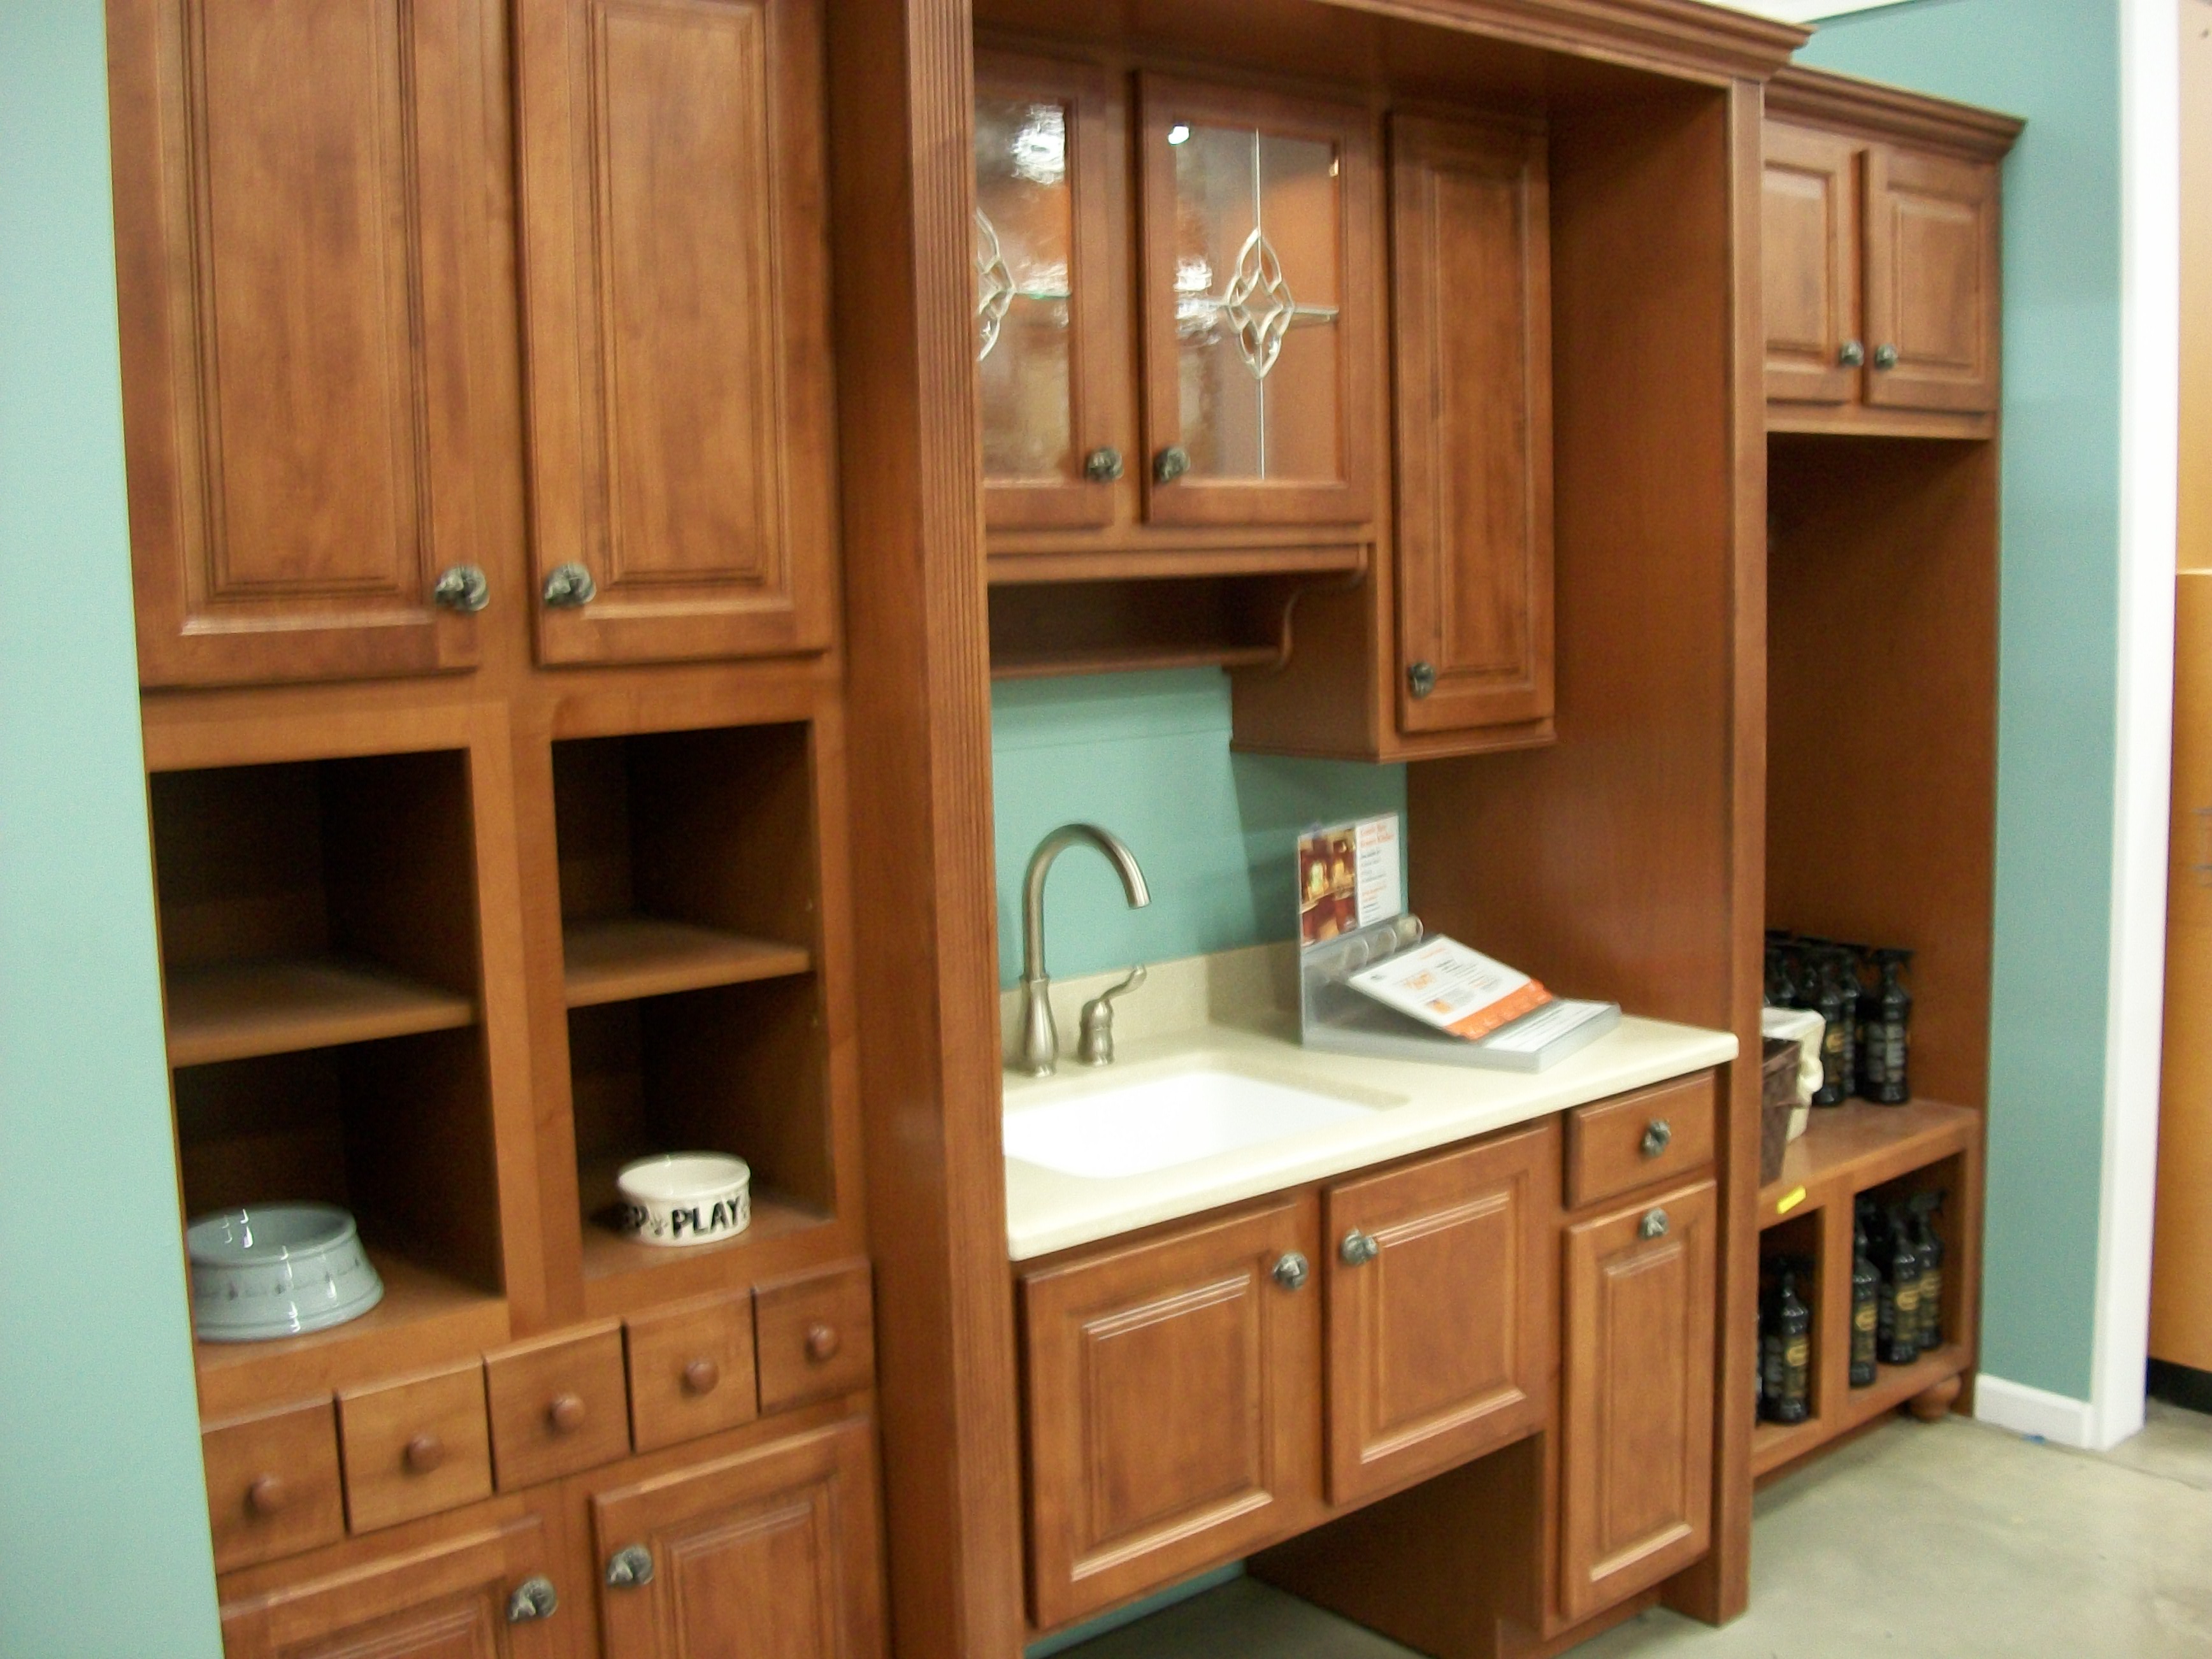 File:Kitchen cabinet display in 2009.jpg - Wikipedia